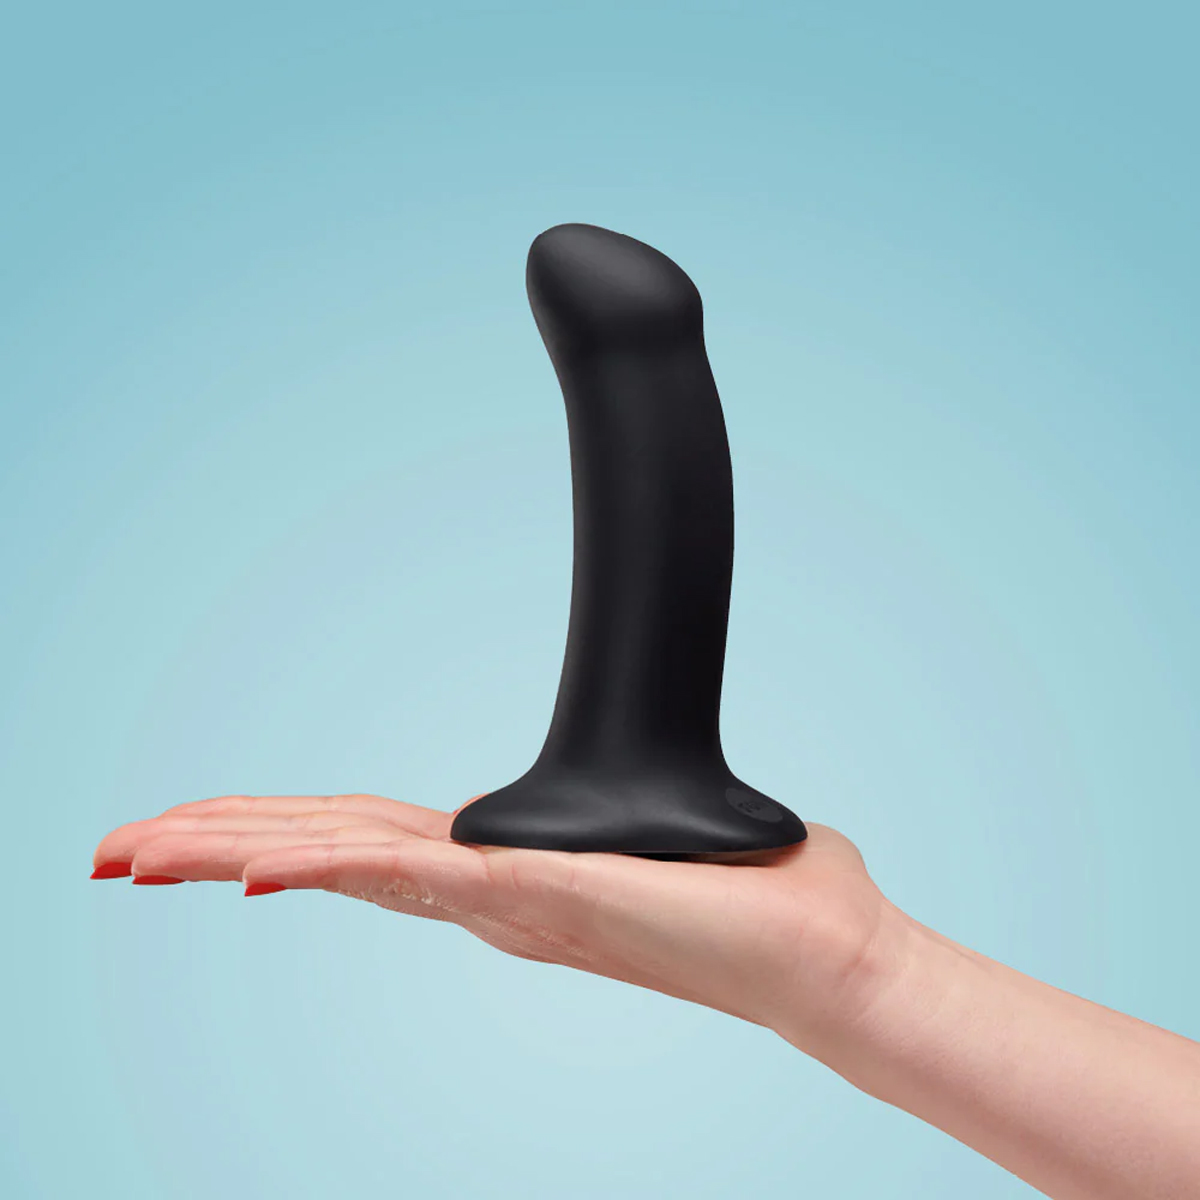 Amor dildo sex toy in women hand